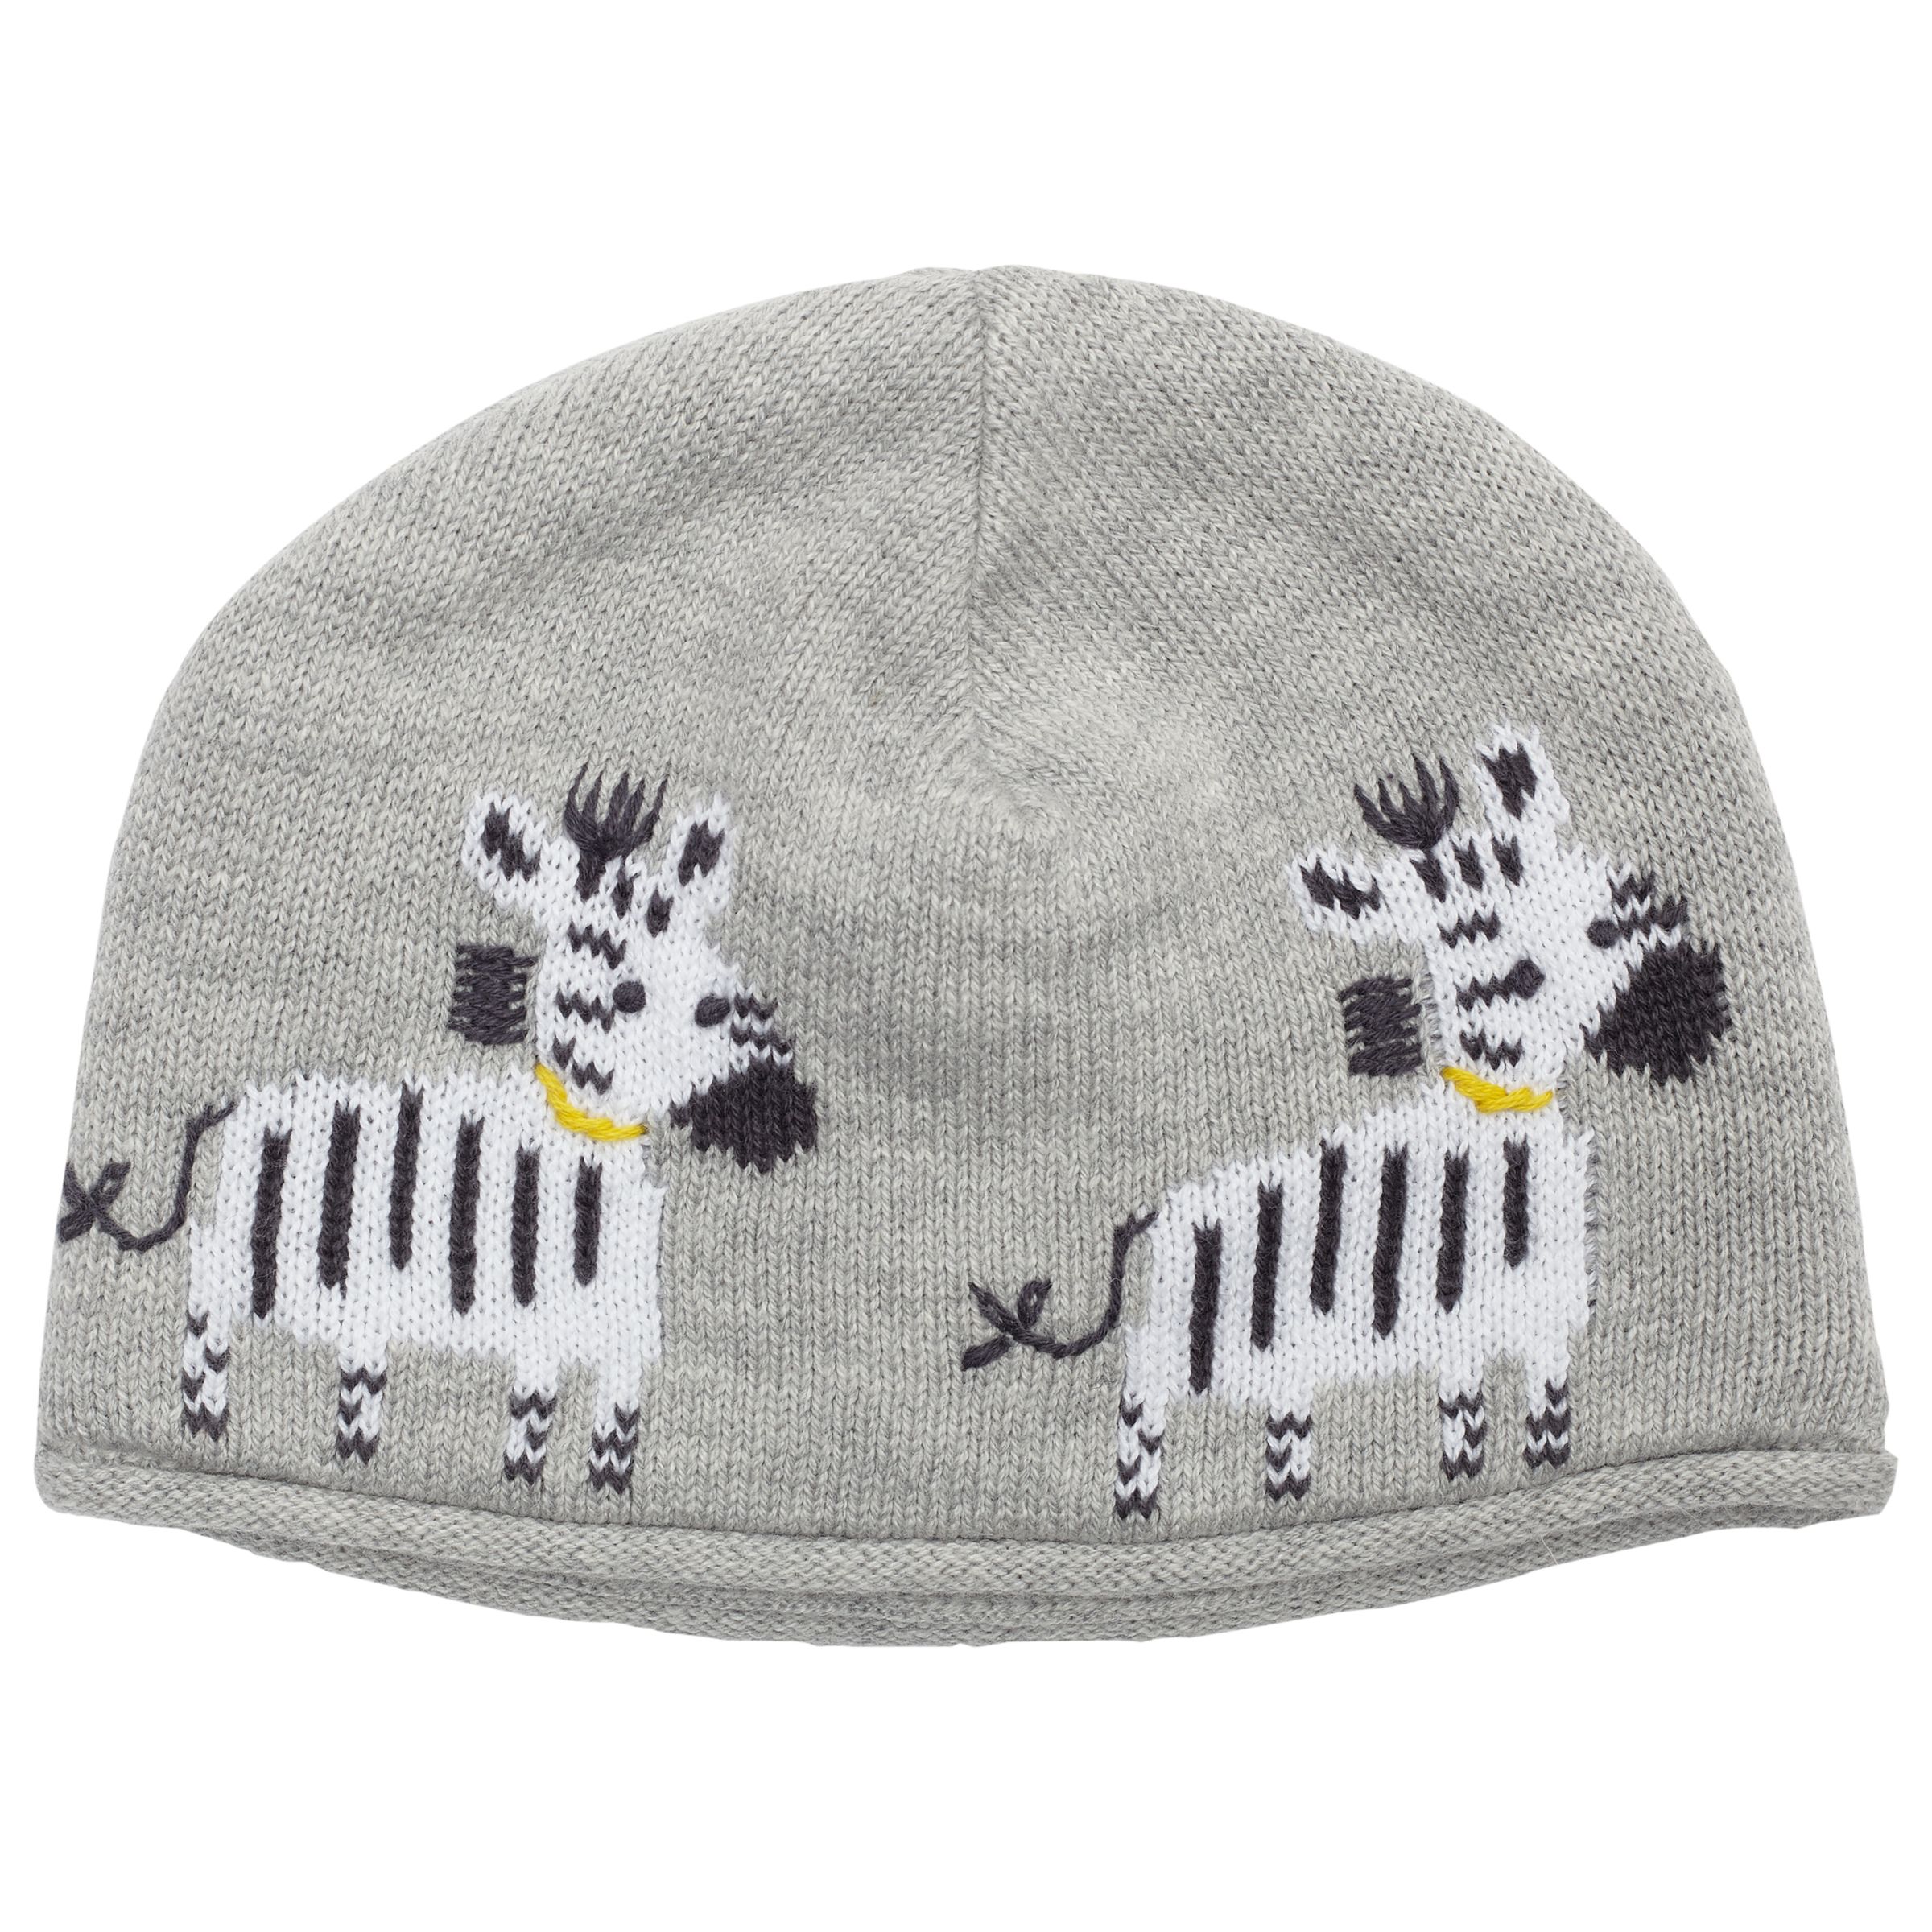 John Lewis & Partners Baby Knitted Zebra Hat, Grey